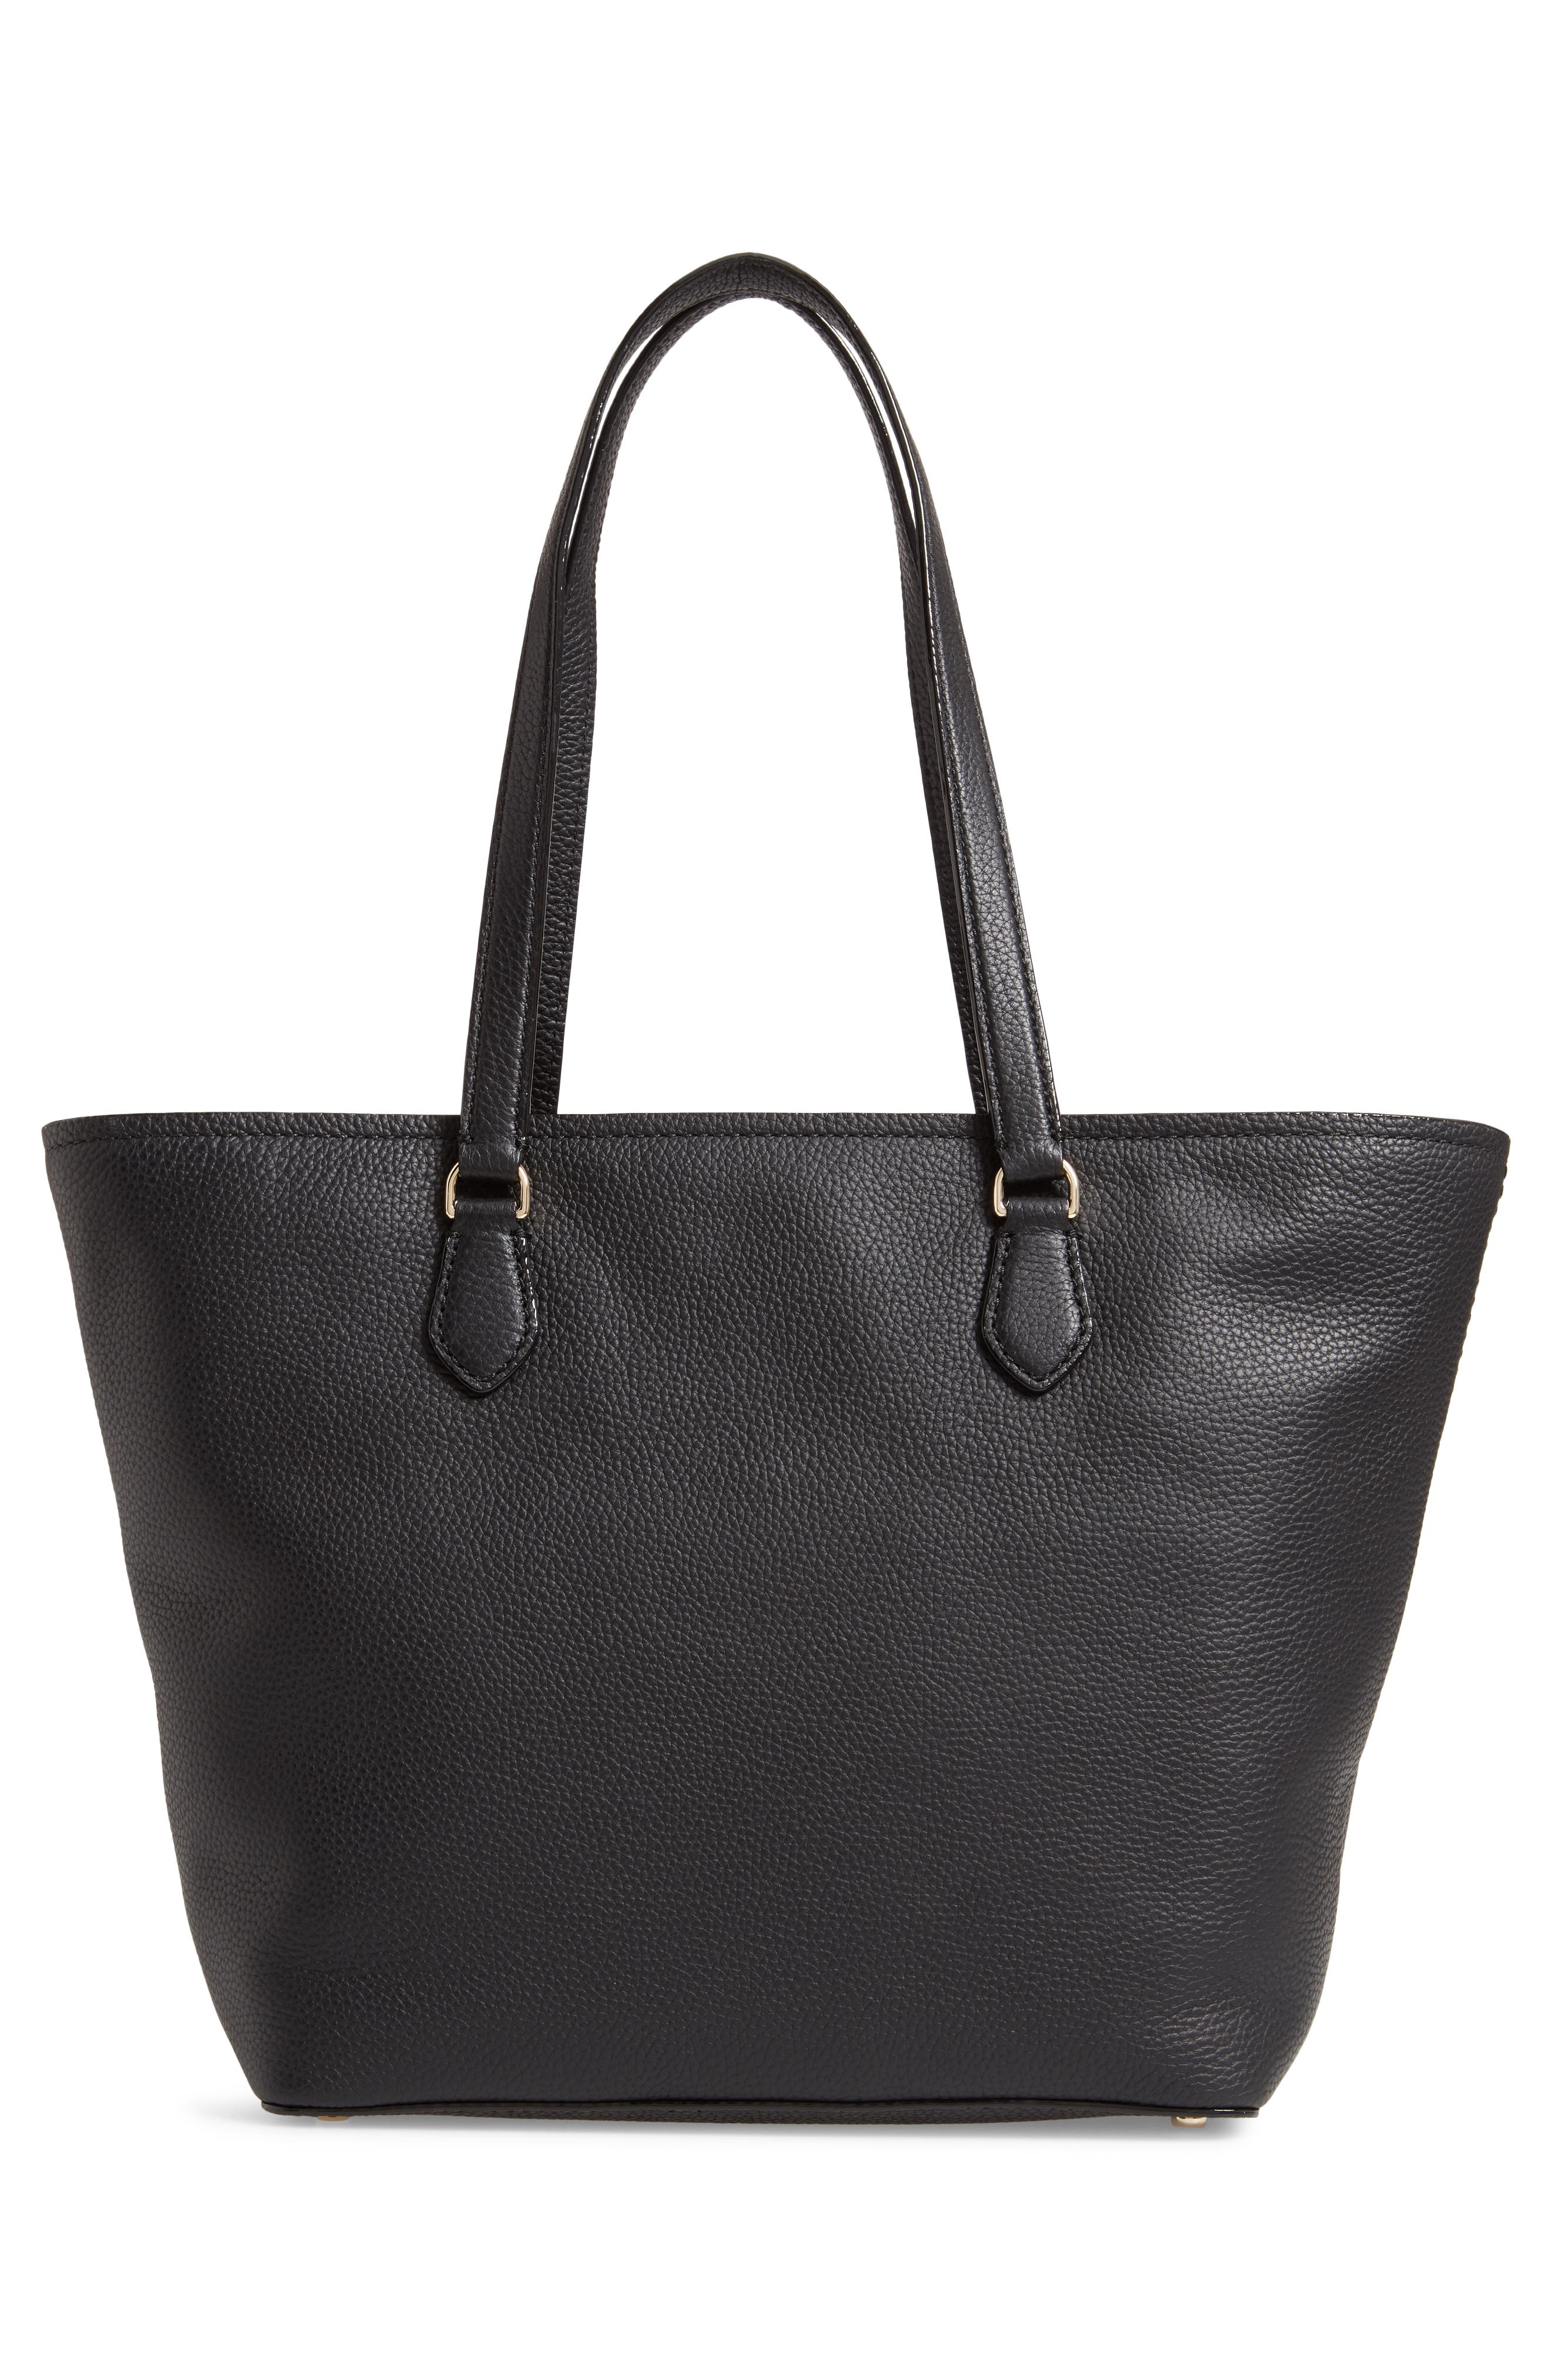 kate spade new york | jana leather tote bag | HauteLook